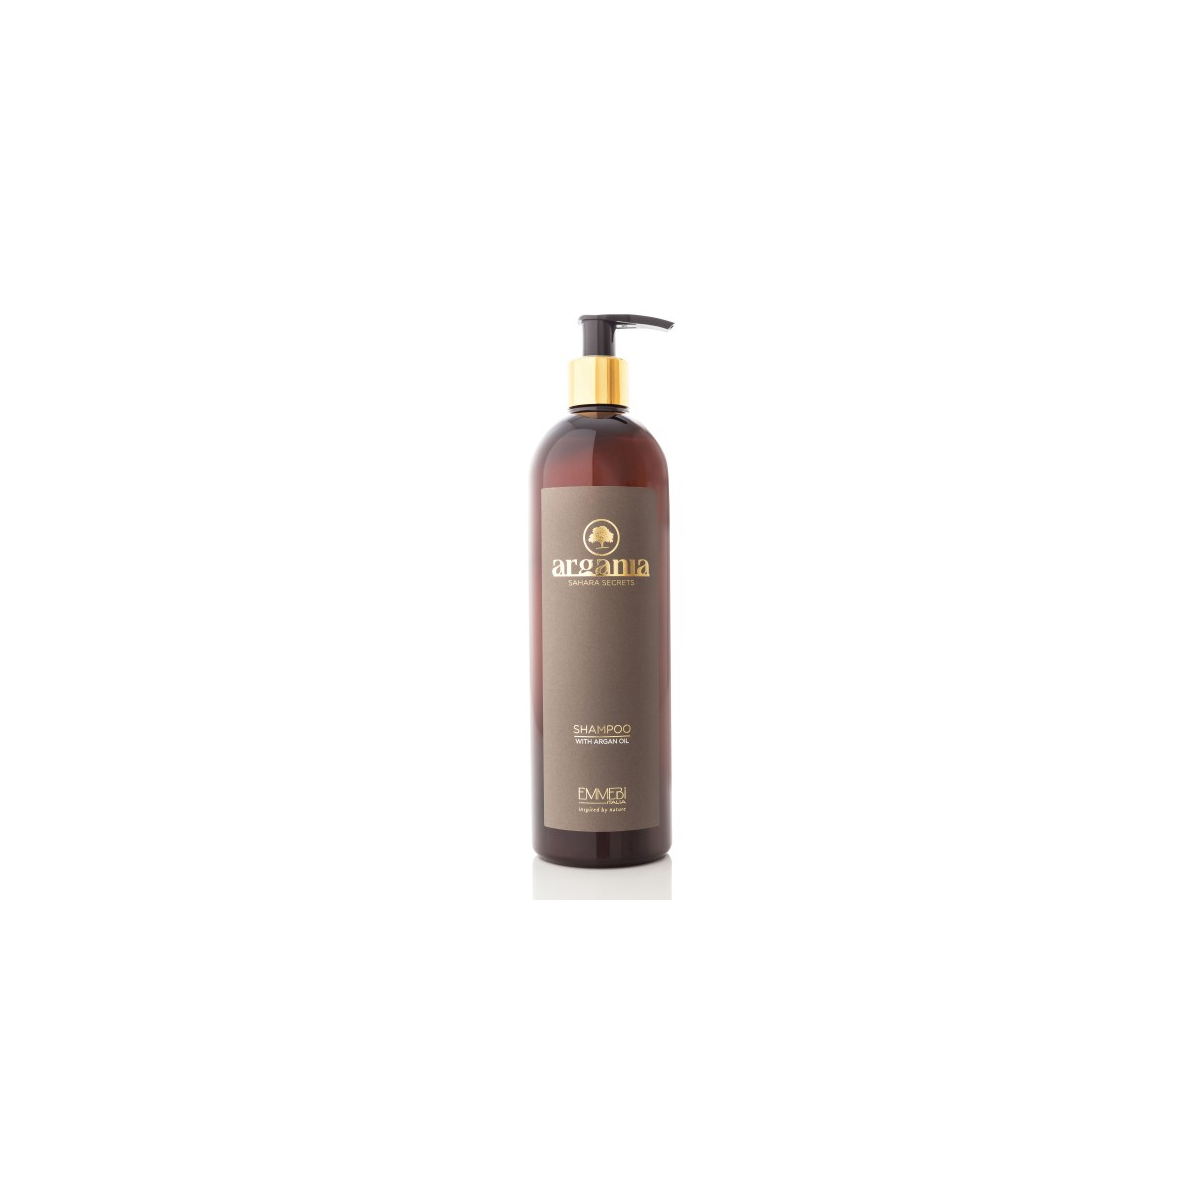 EMMEBI ITALIA - ARGANIA SHAMPOO (500ml) Shampoo per capelli secchi